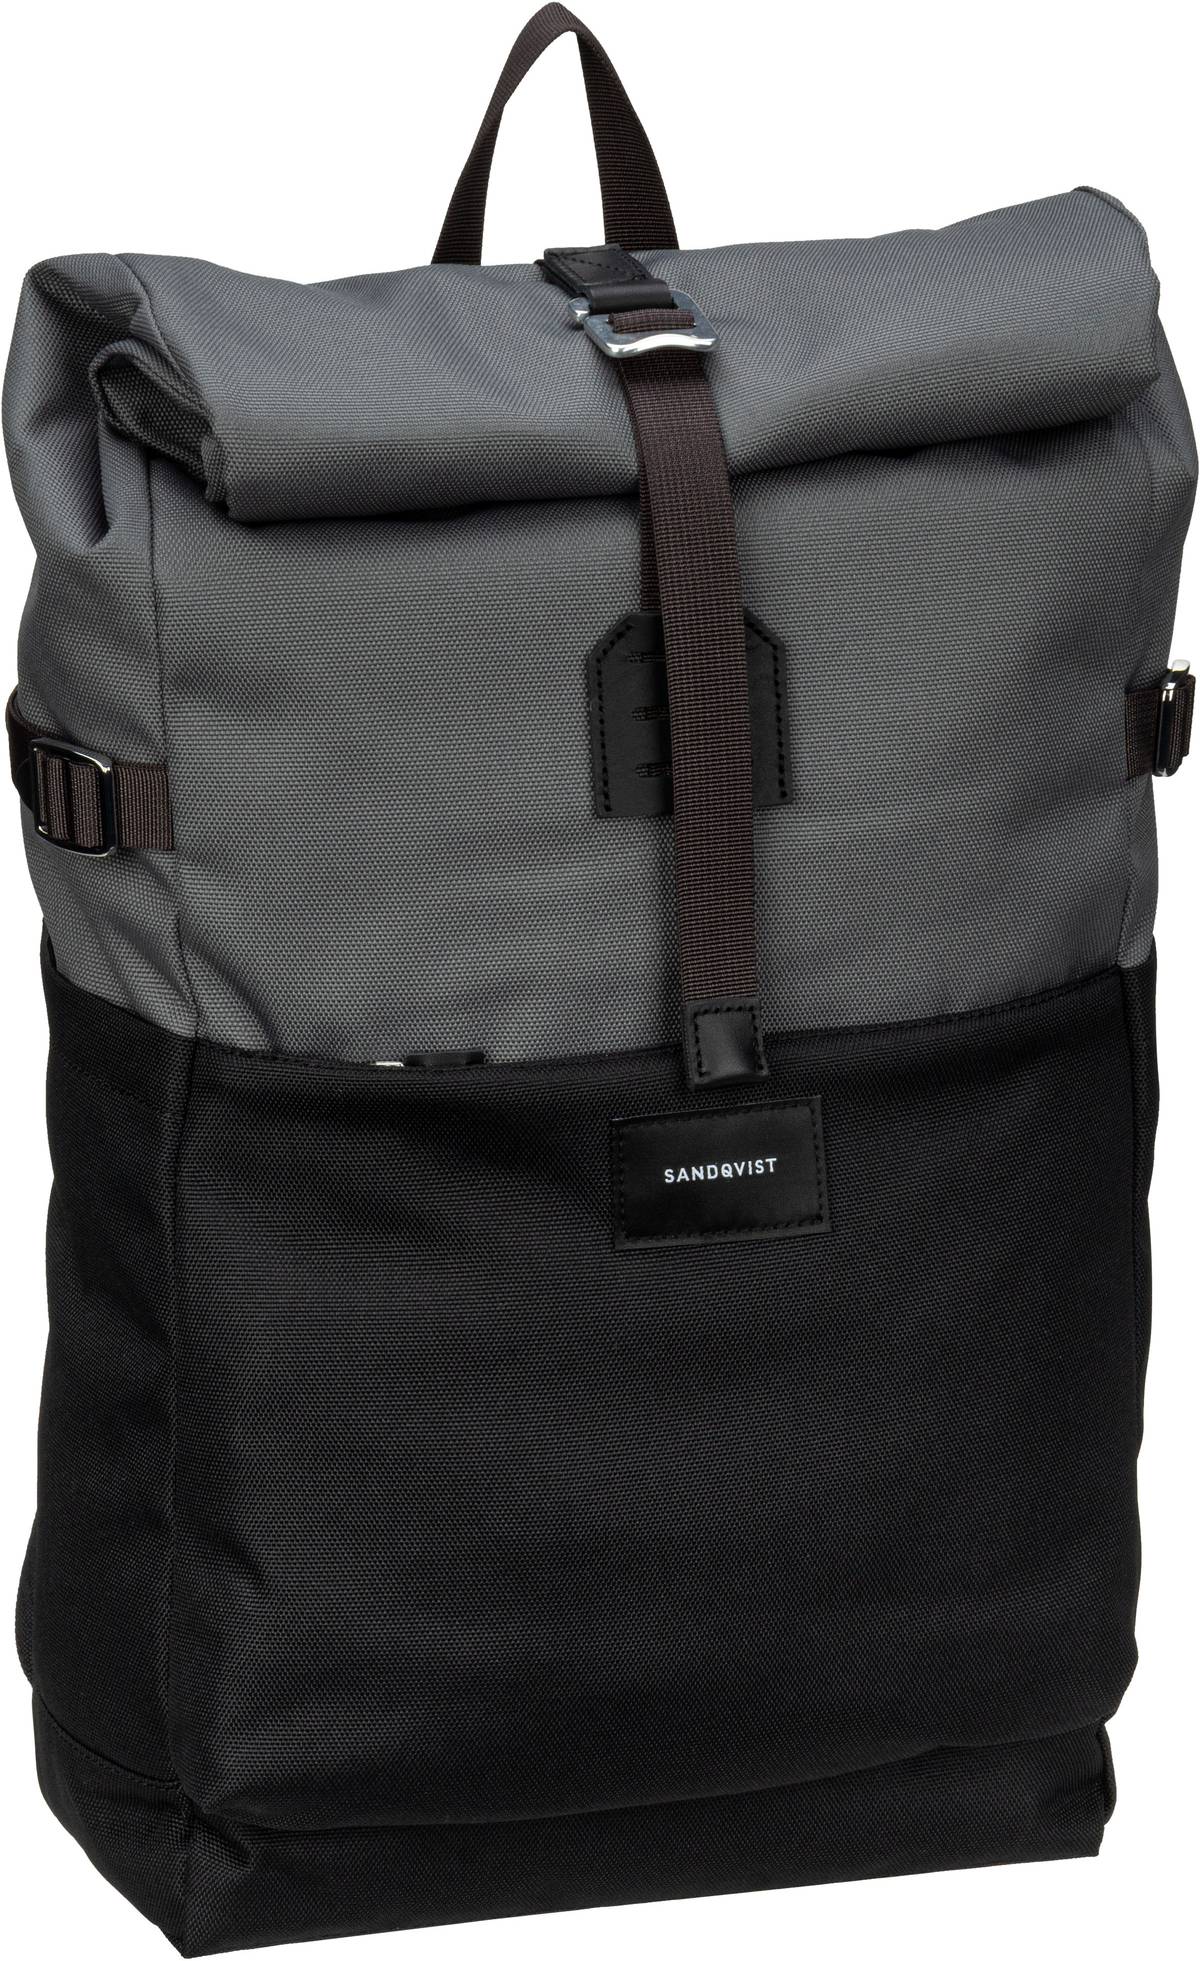 Sandqvist Ilon Rolltop Backpack  in Multi Dark (11.5 Liter), Rucksack / Backpack